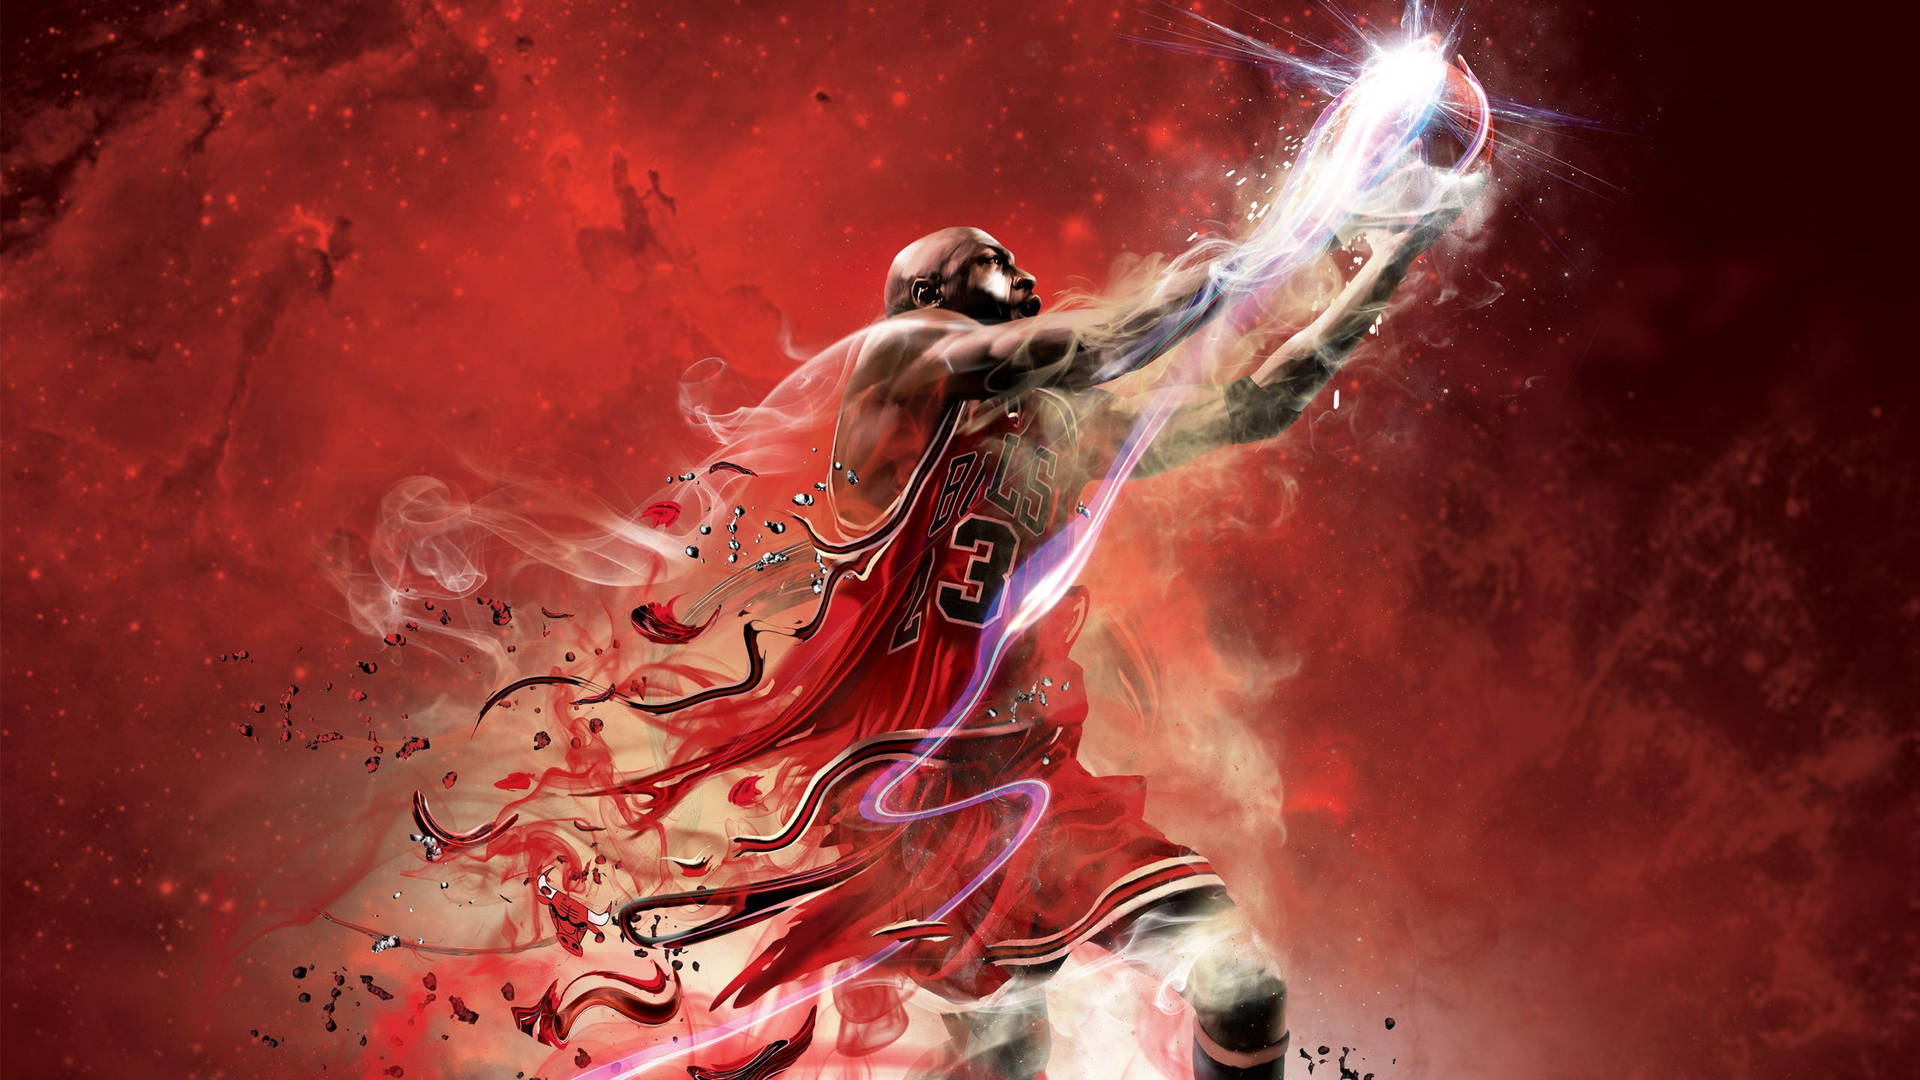 Michael Jordan 2560X1440 Wallpaper and Background Image